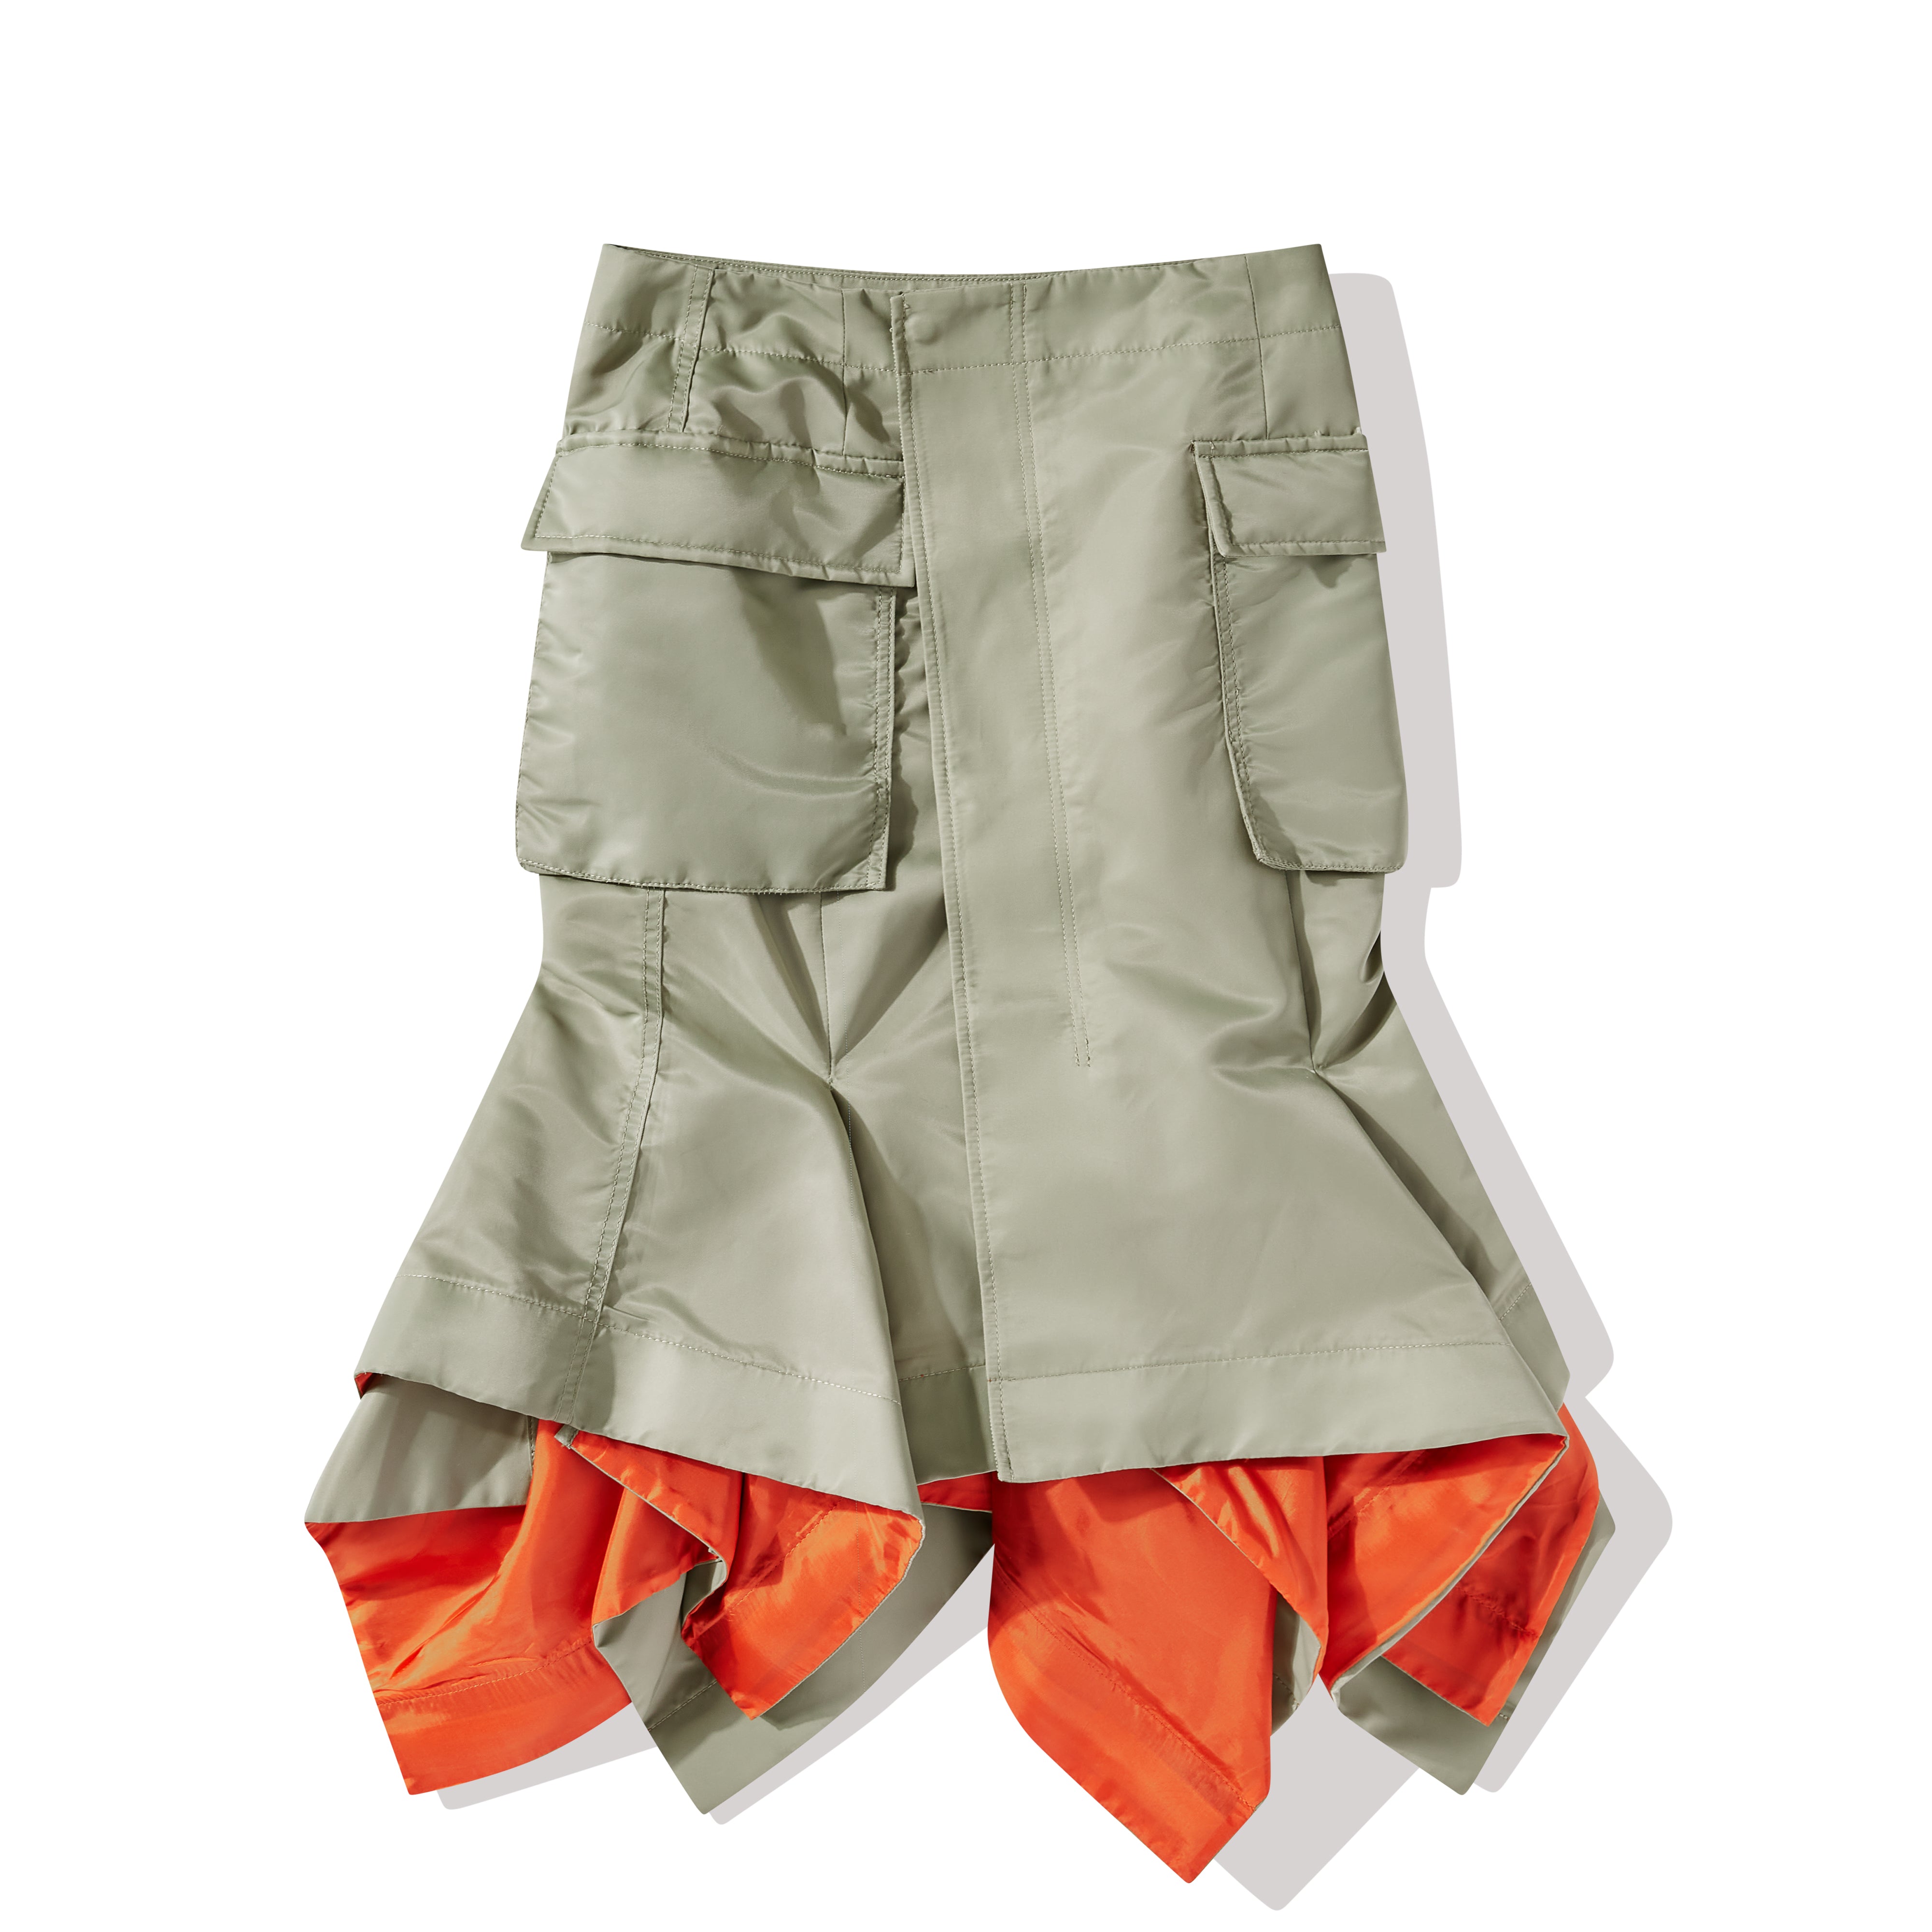 sacai: Women's Nylon Twill Skirt (Khaki) | DSMNY E-SHOP